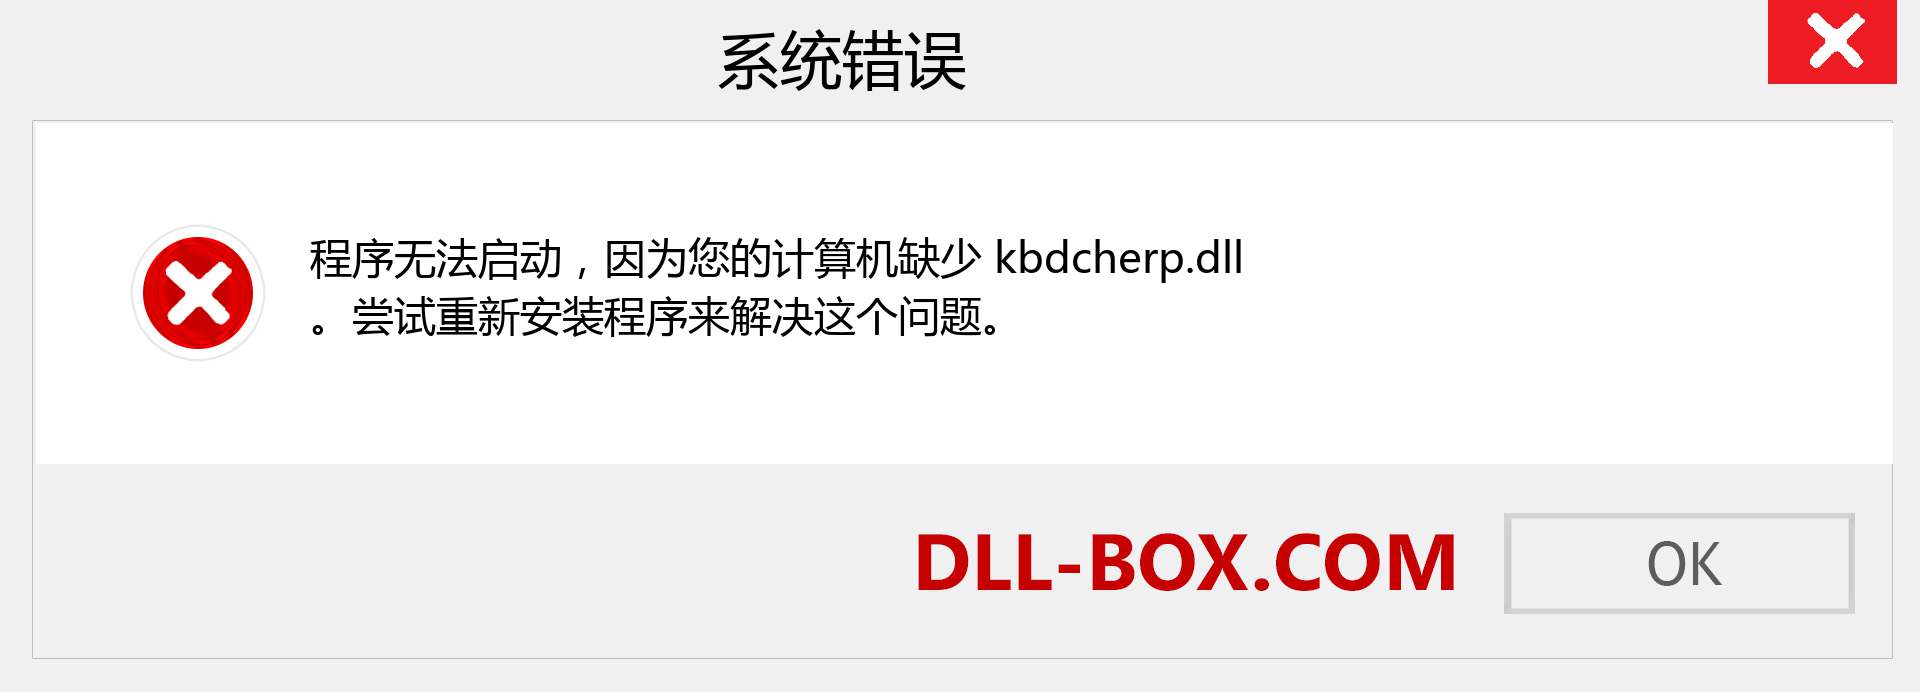 kbdcherp.dll 文件丢失？。 适用于 Windows 7、8、10 的下载 - 修复 Windows、照片、图像上的 kbdcherp dll 丢失错误